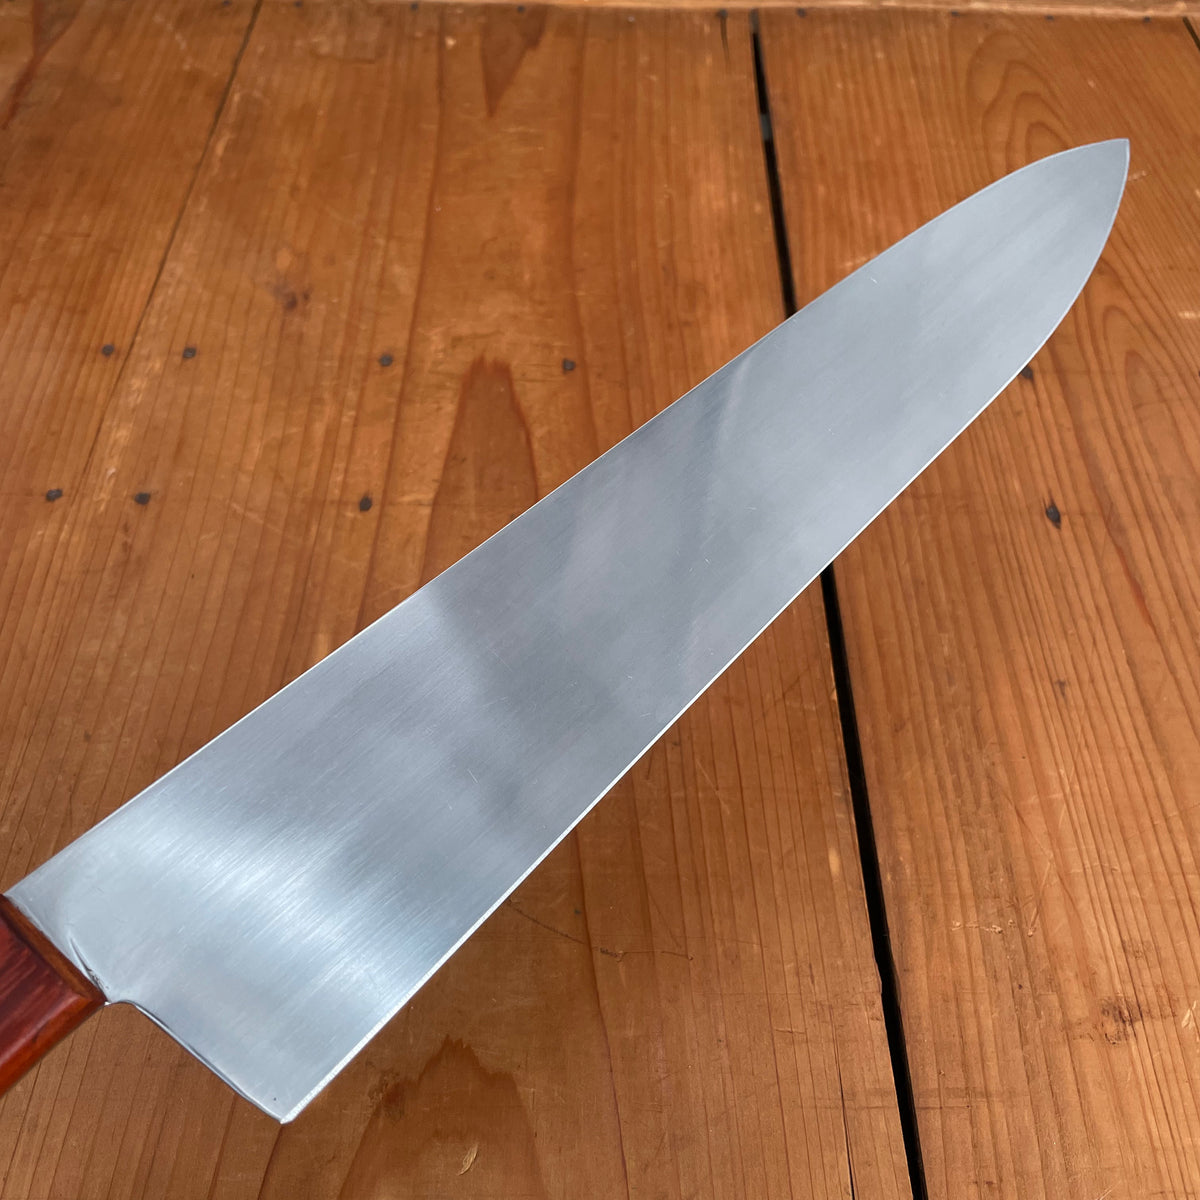 J Adams 12" Chef Knife Carbon Steel Pinned Padauk Wood